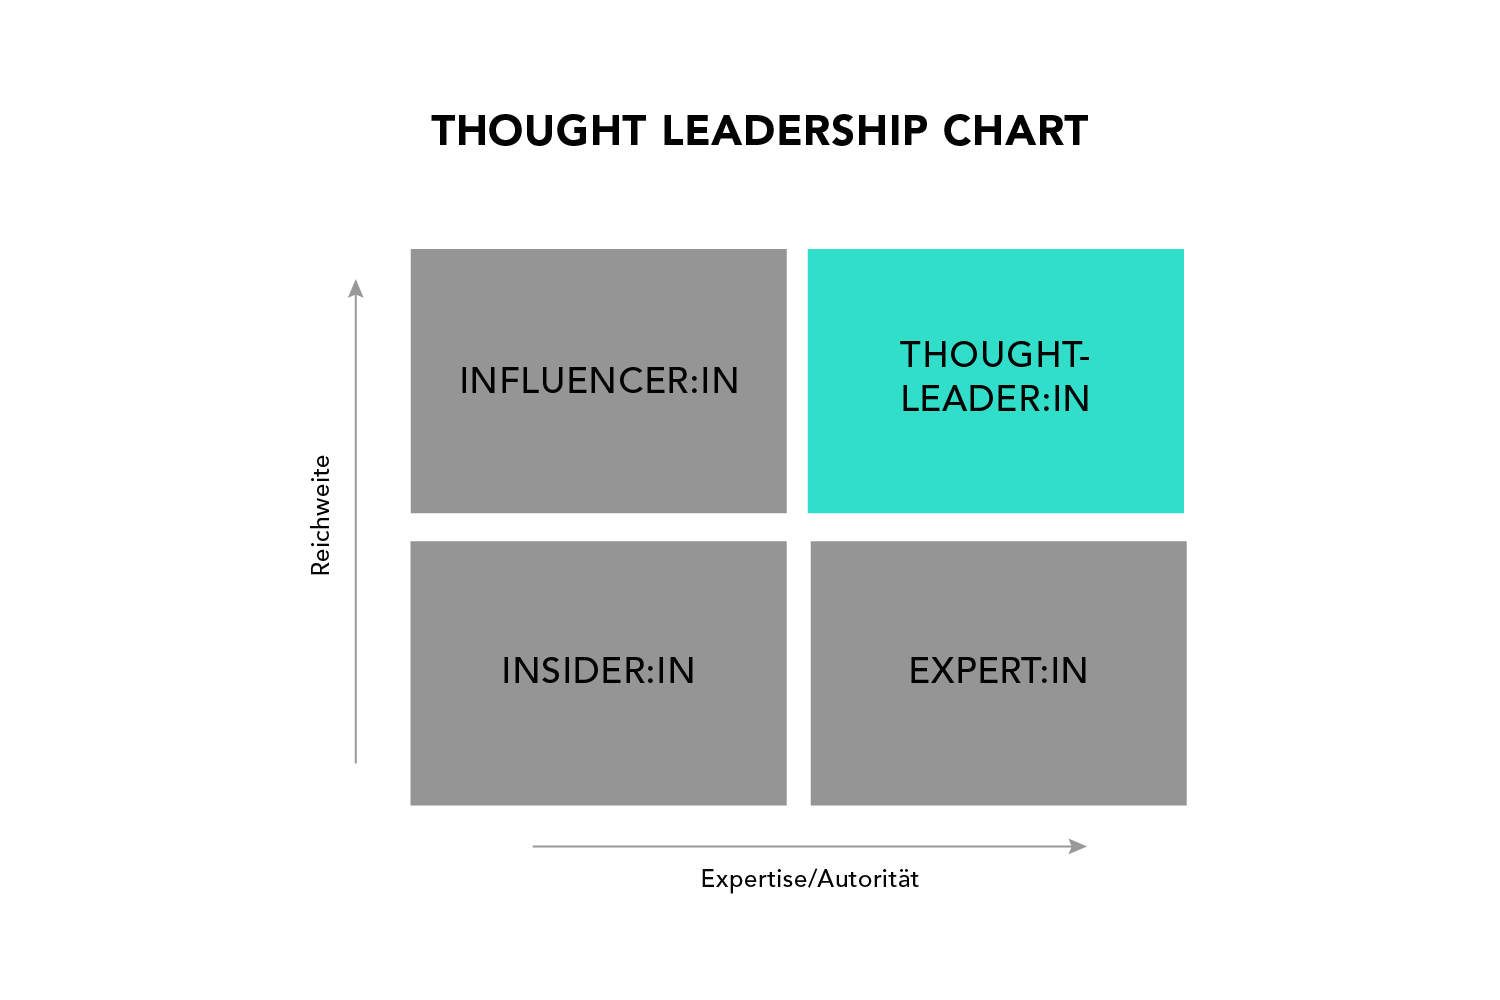 Thought Leadership Chart: Thought Leadership zeichnet sich durch hohe Reichweite und hohe Expertise aus.